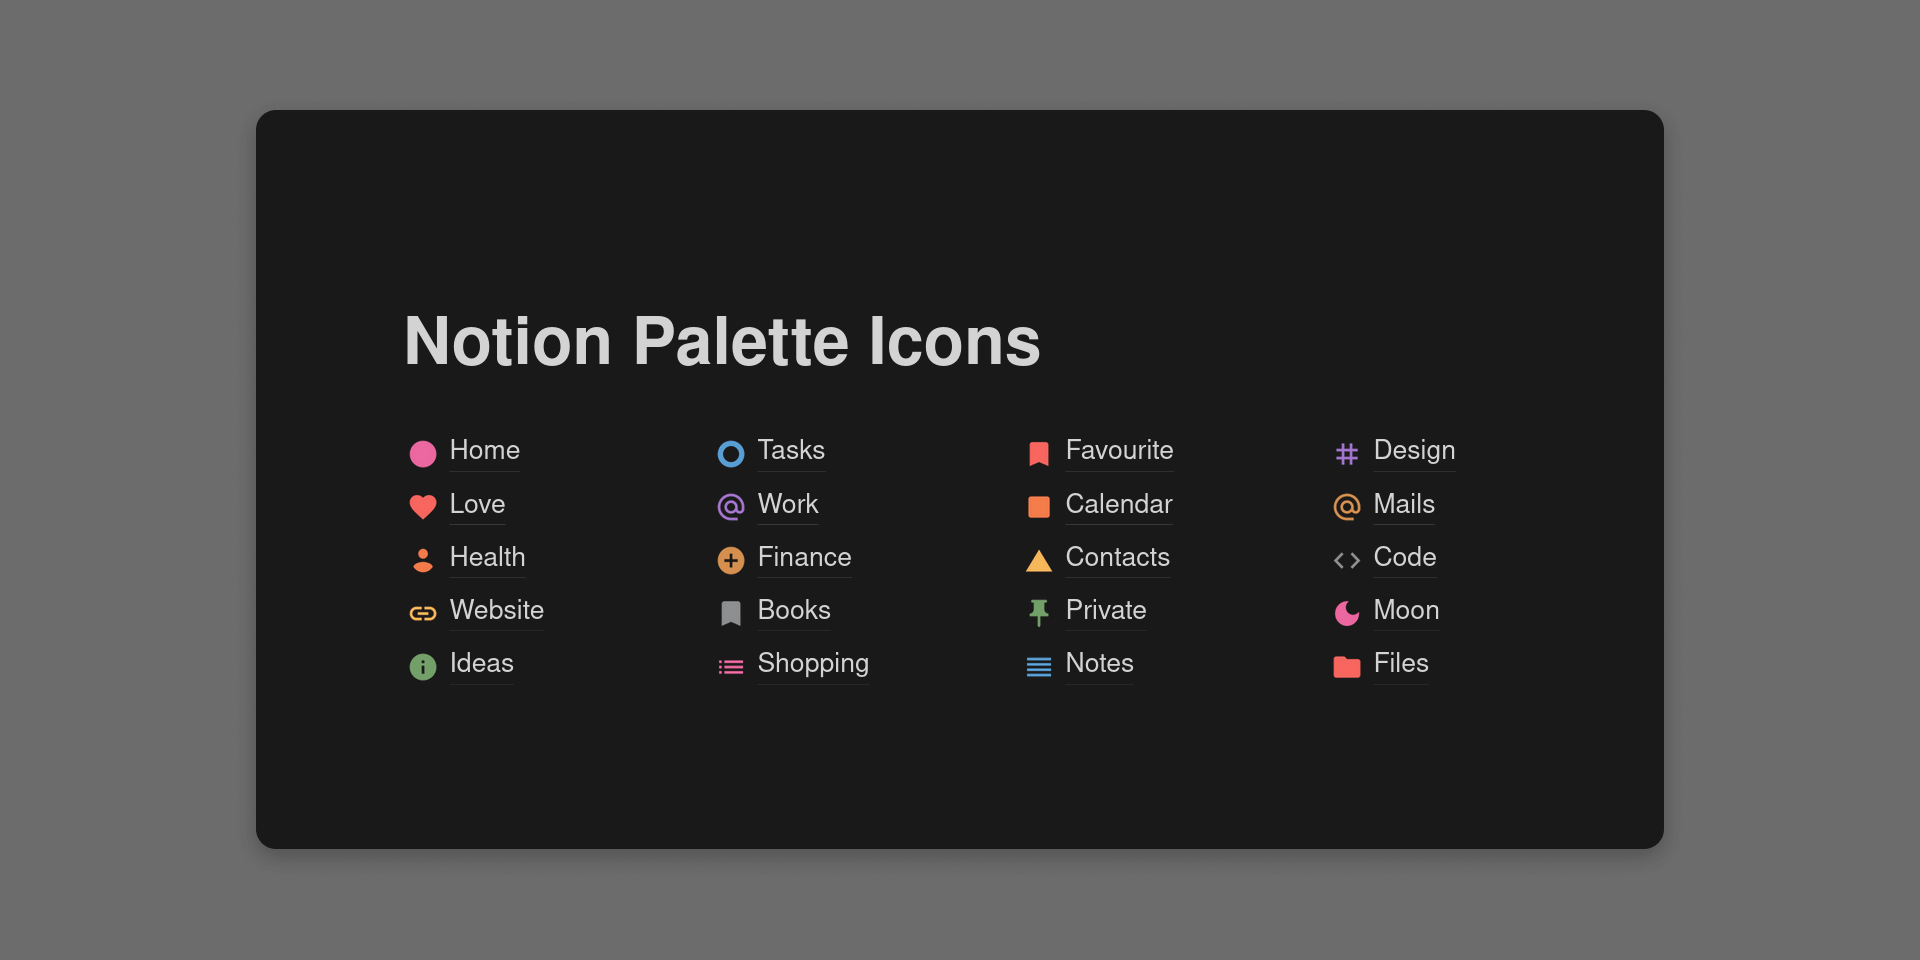 Notion Palette Icons - Dark Mode